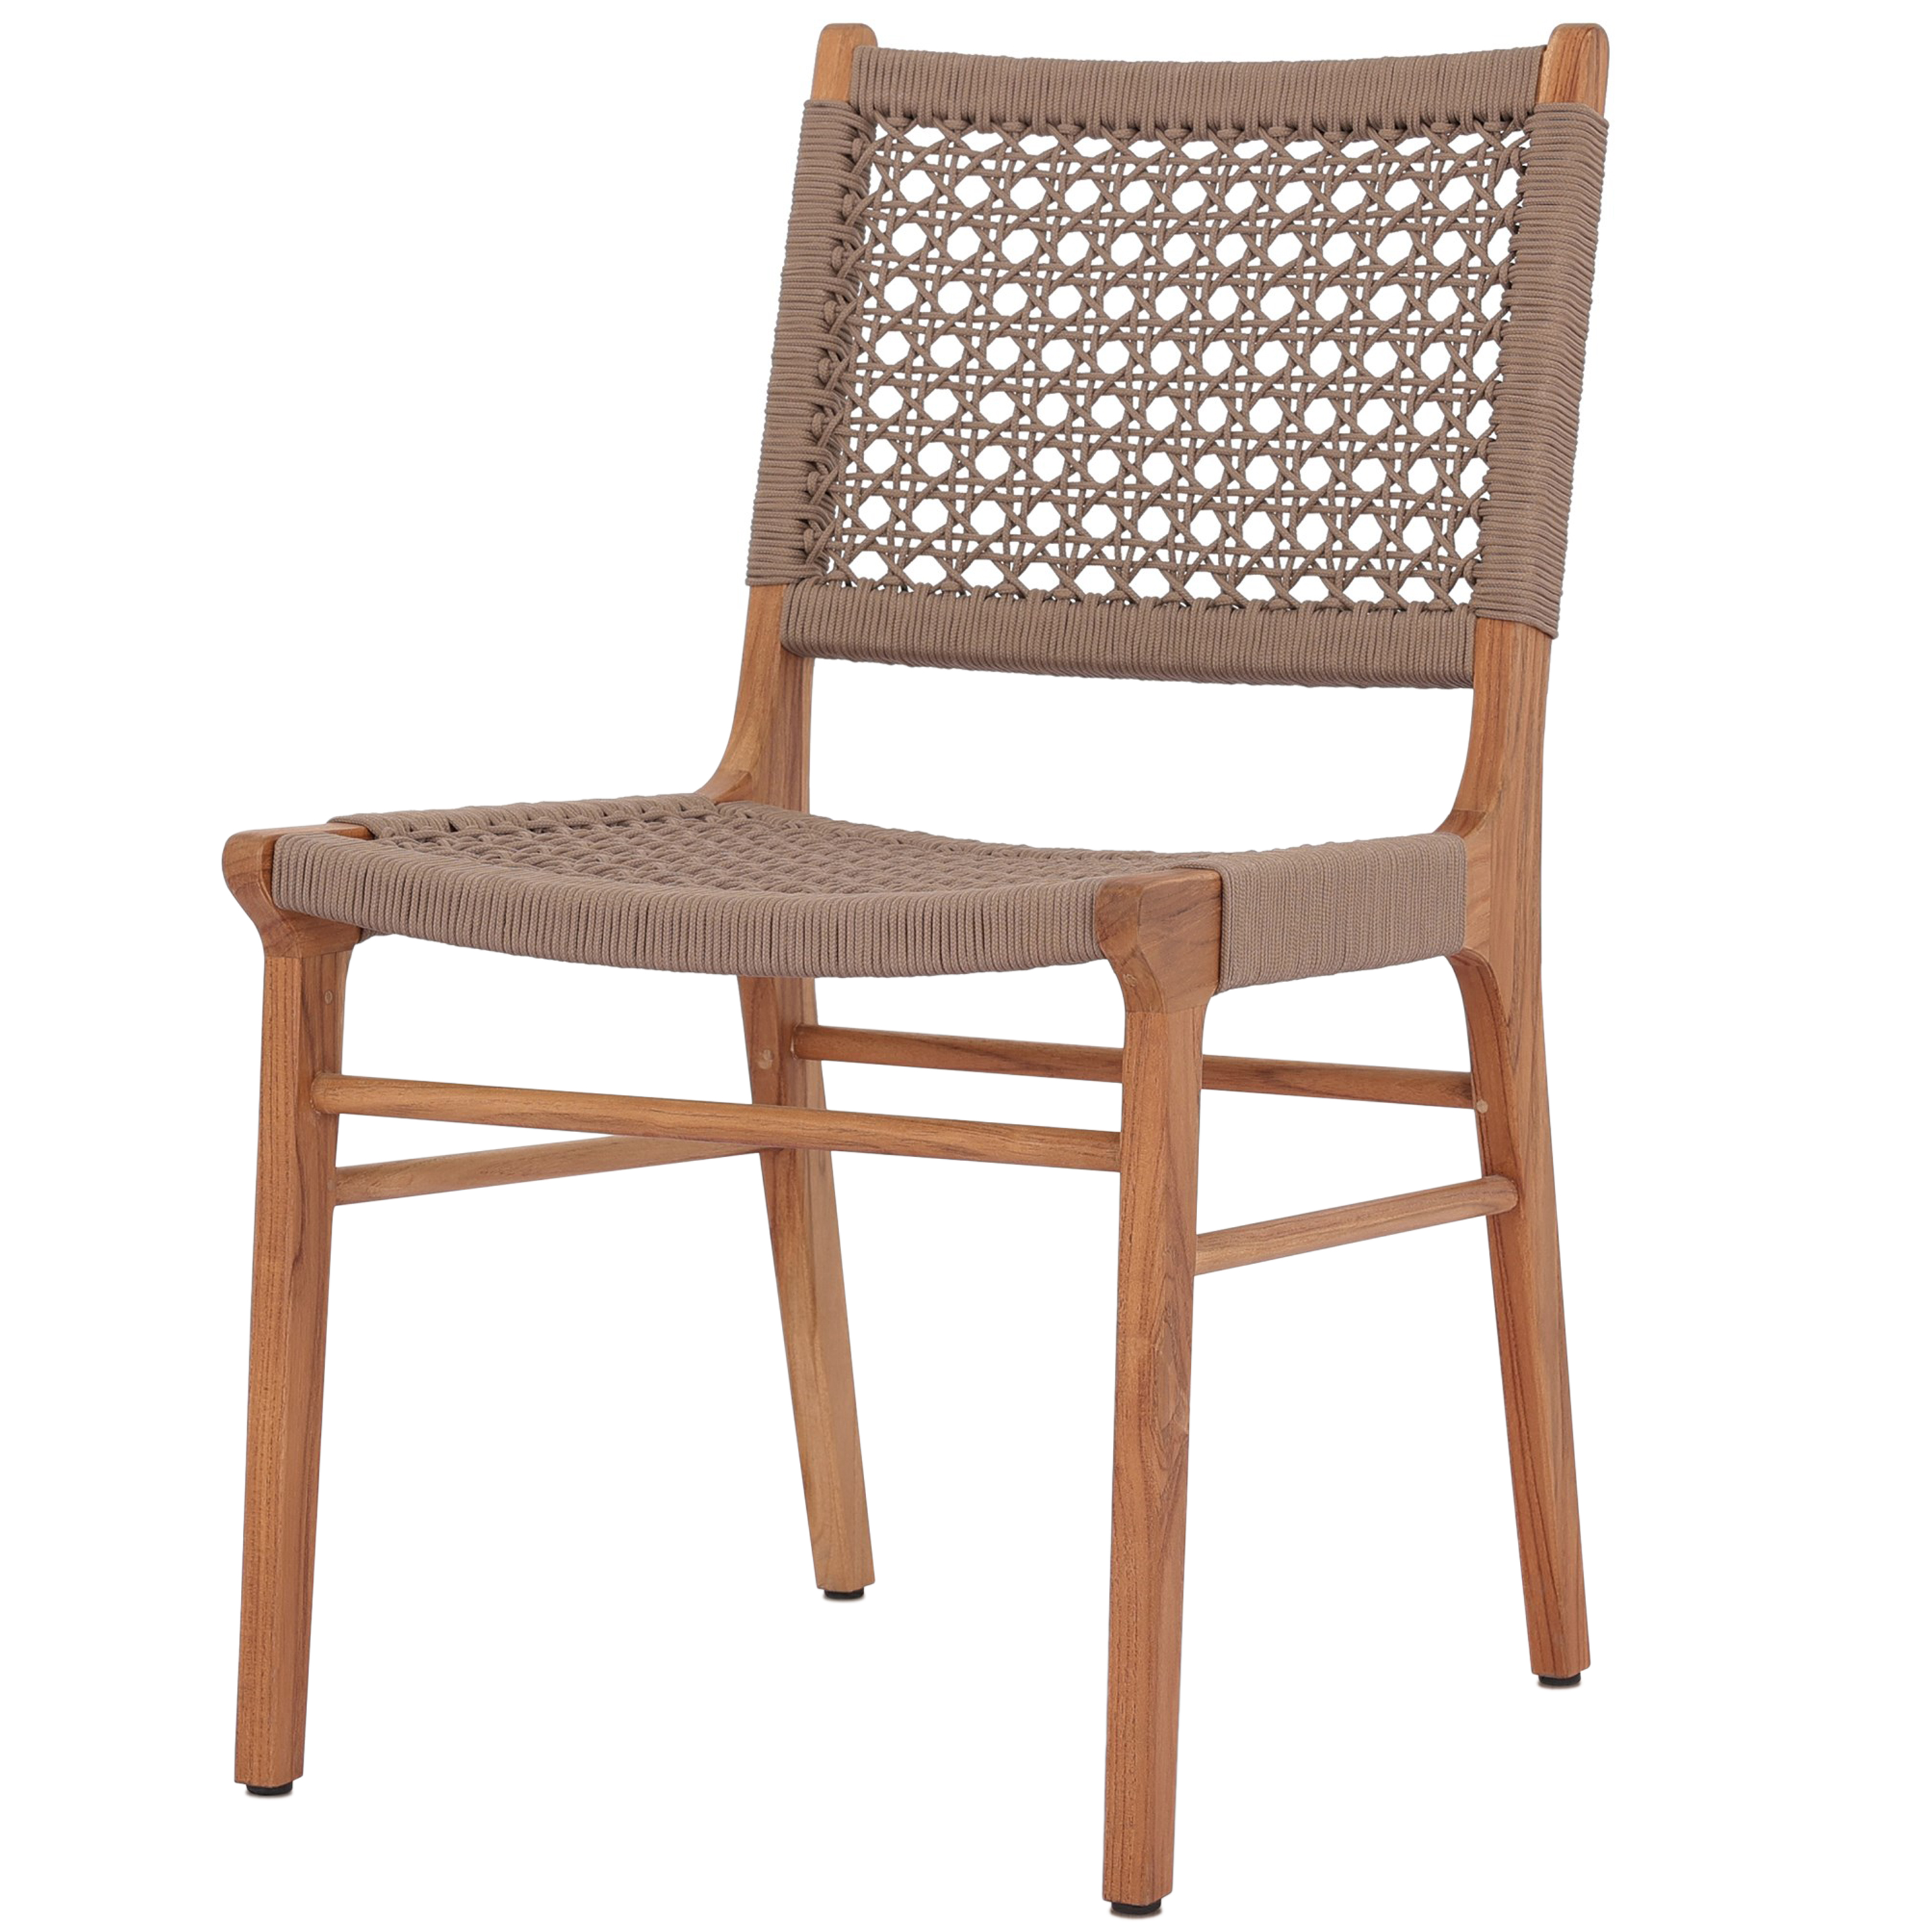 Becca Outdoor Dining Chair, Natural Teak/Khaki Rope